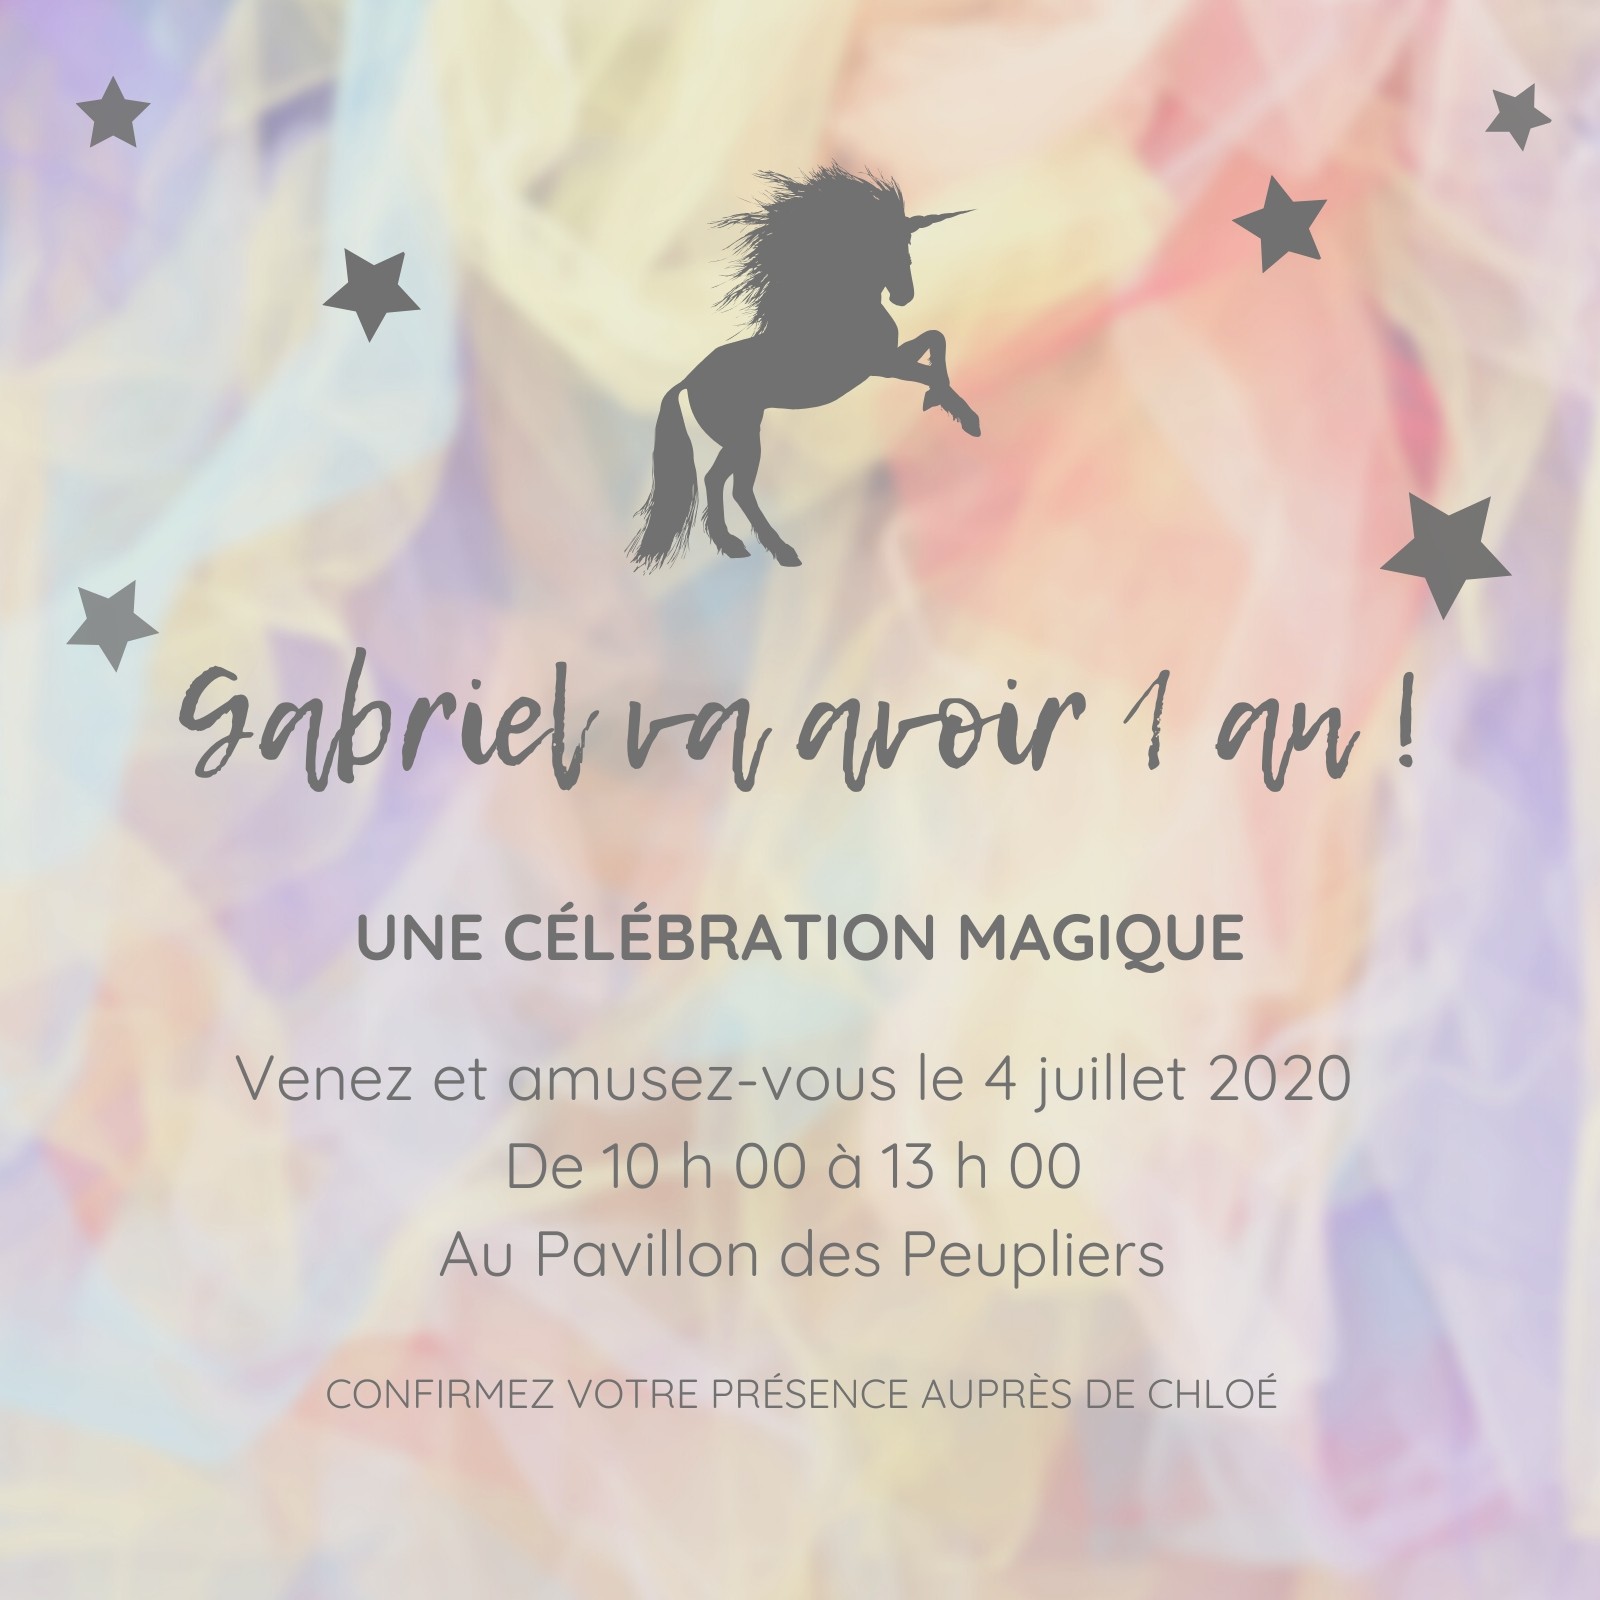 https://marketplace.canva.com/EADzX_jT4mQ/1/0/1600w/canva-gris-bleu-rose-licorne-anniversaire-invitation-jW29-tOaT4w.jpg